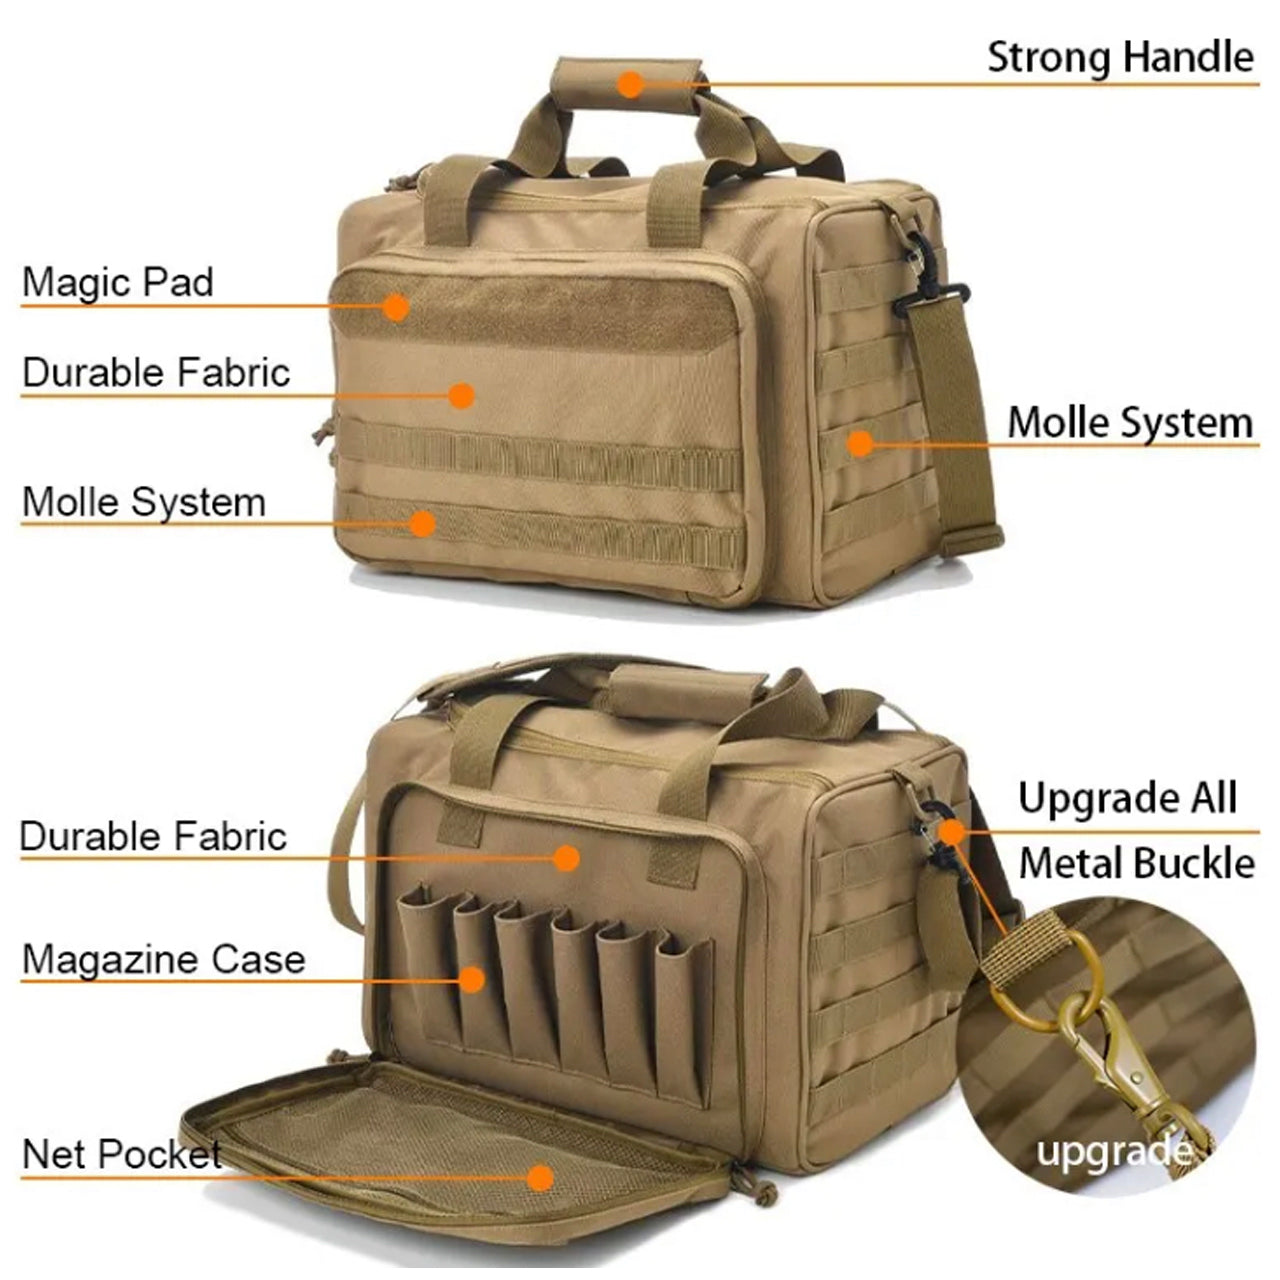 Tactical Gun Range Bag Shooting Duffle Bags for Handguns Pistols with Lockable Zipper and Heavy Duty Antiskid Feet. www.defenceqstore.com.au